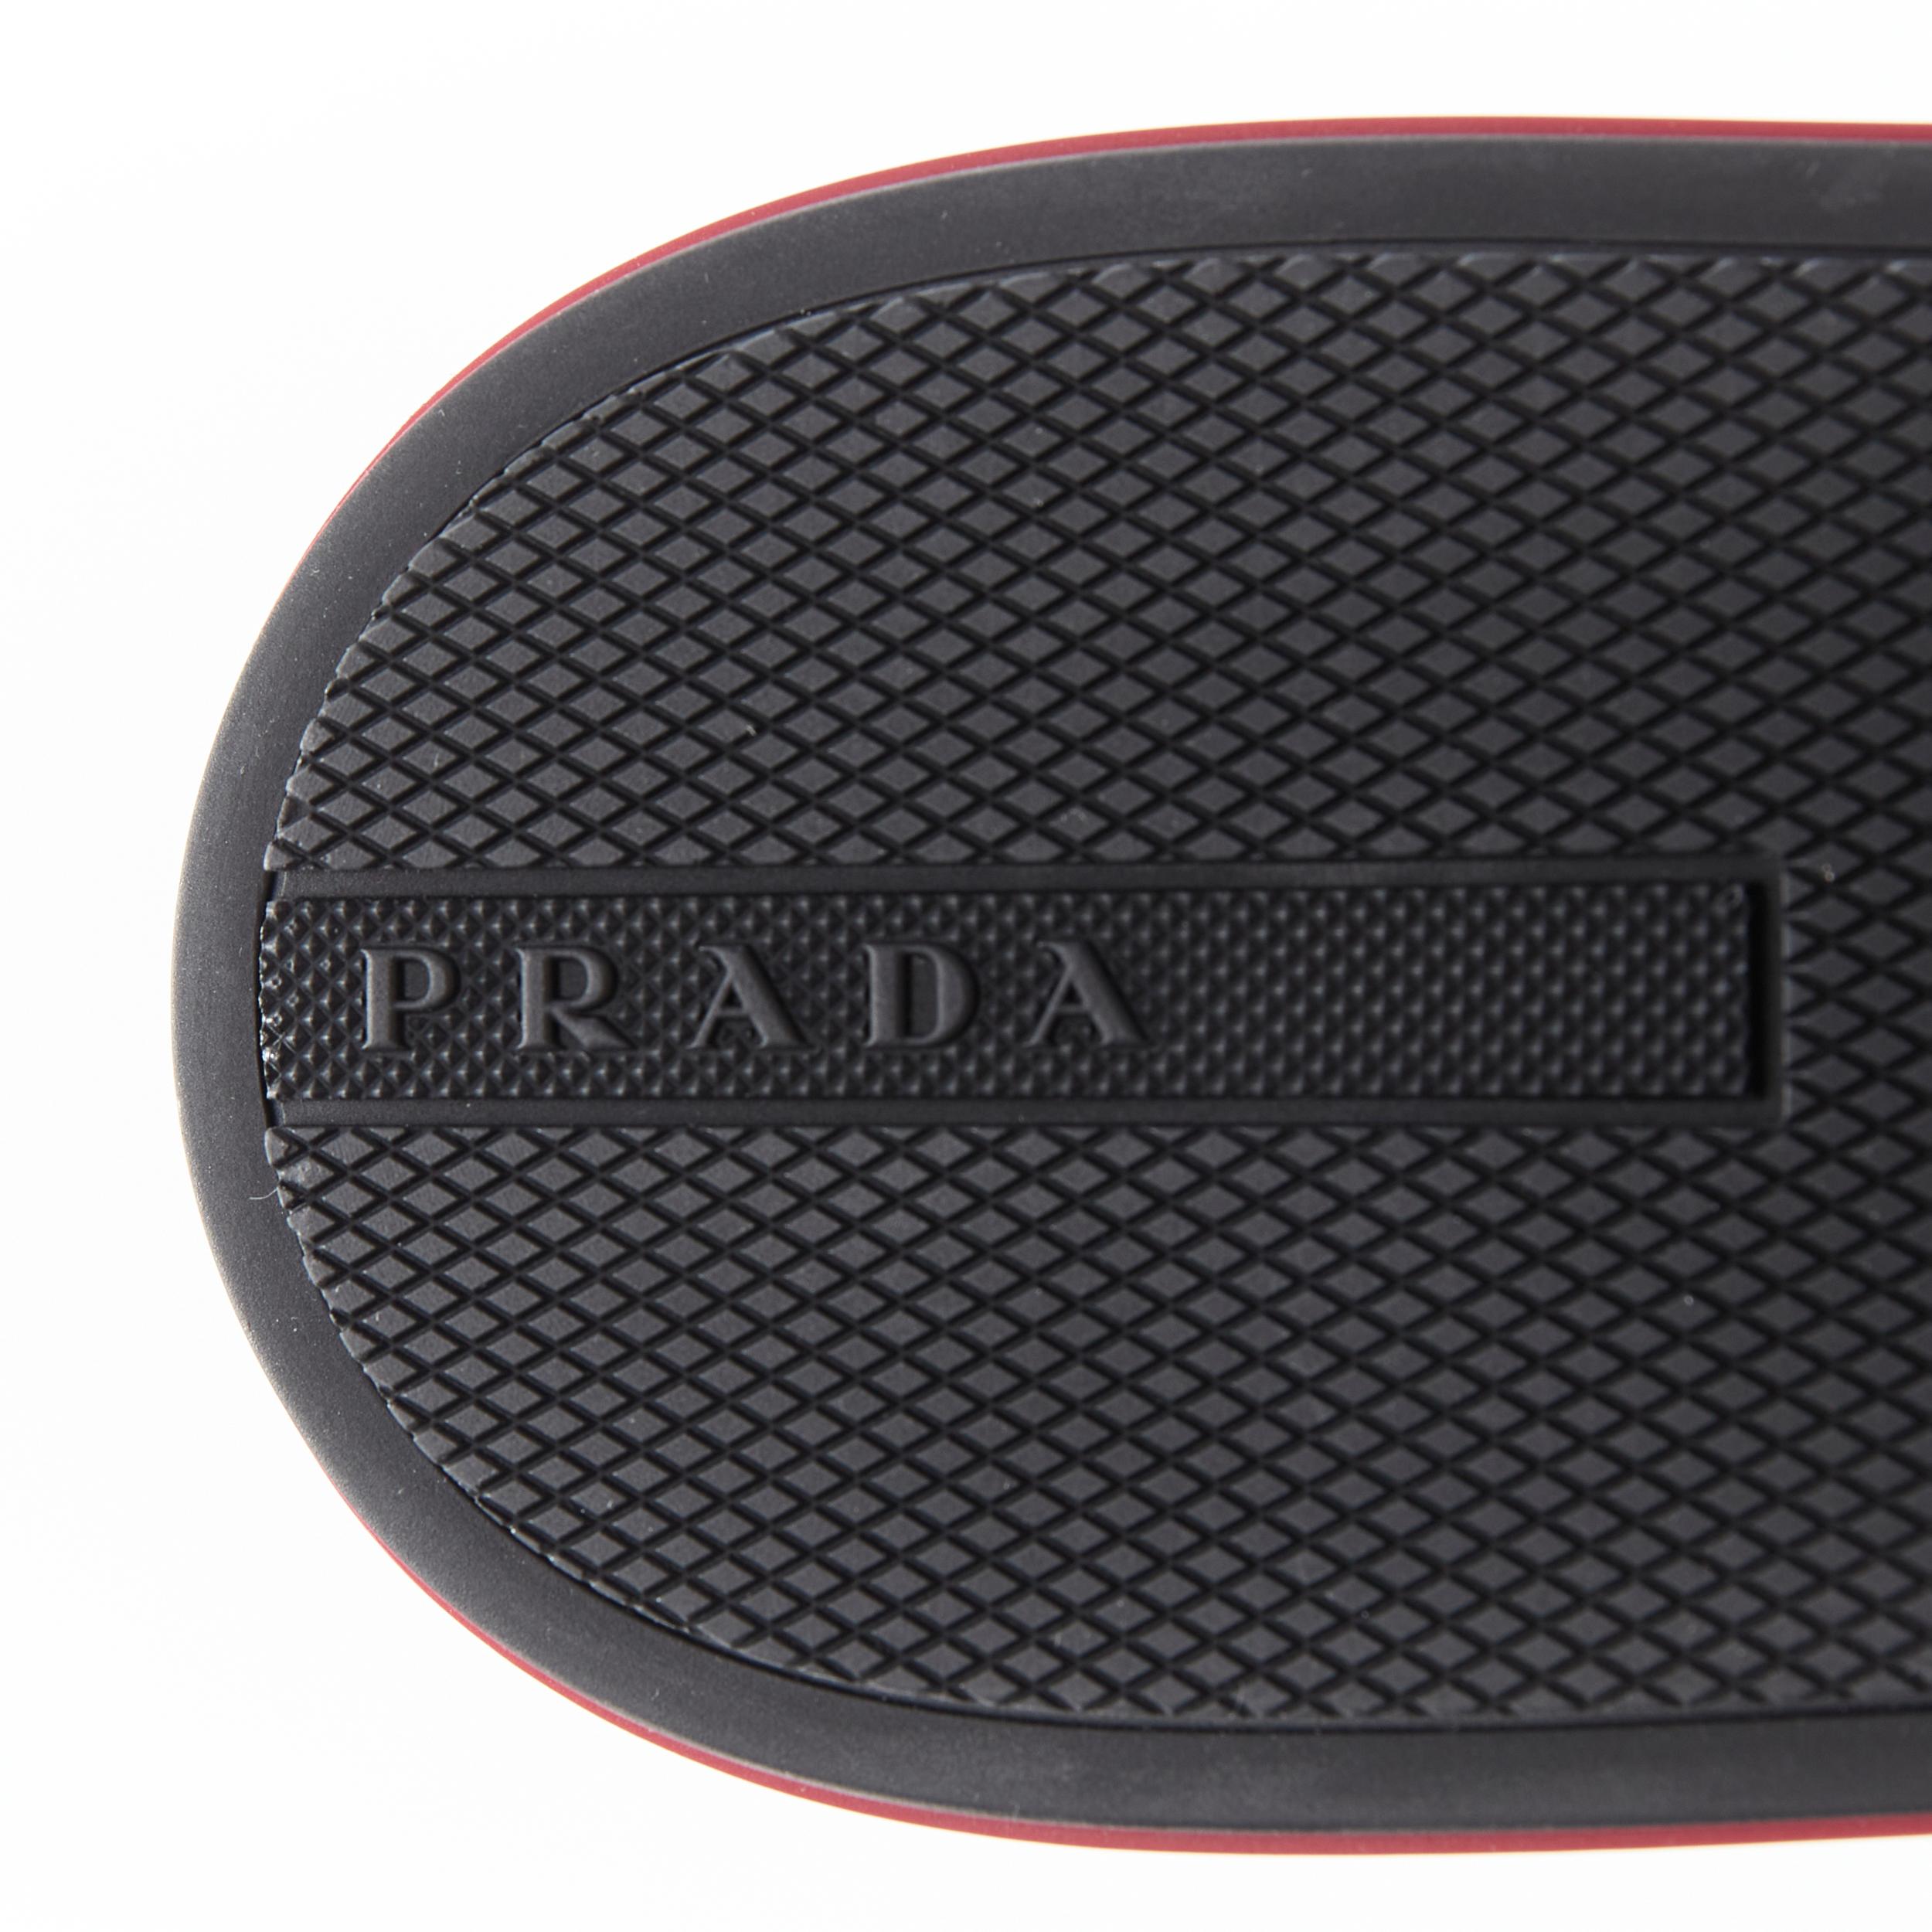 new PRADA white leather triangle logo red white midsole low sneaker UK11 2